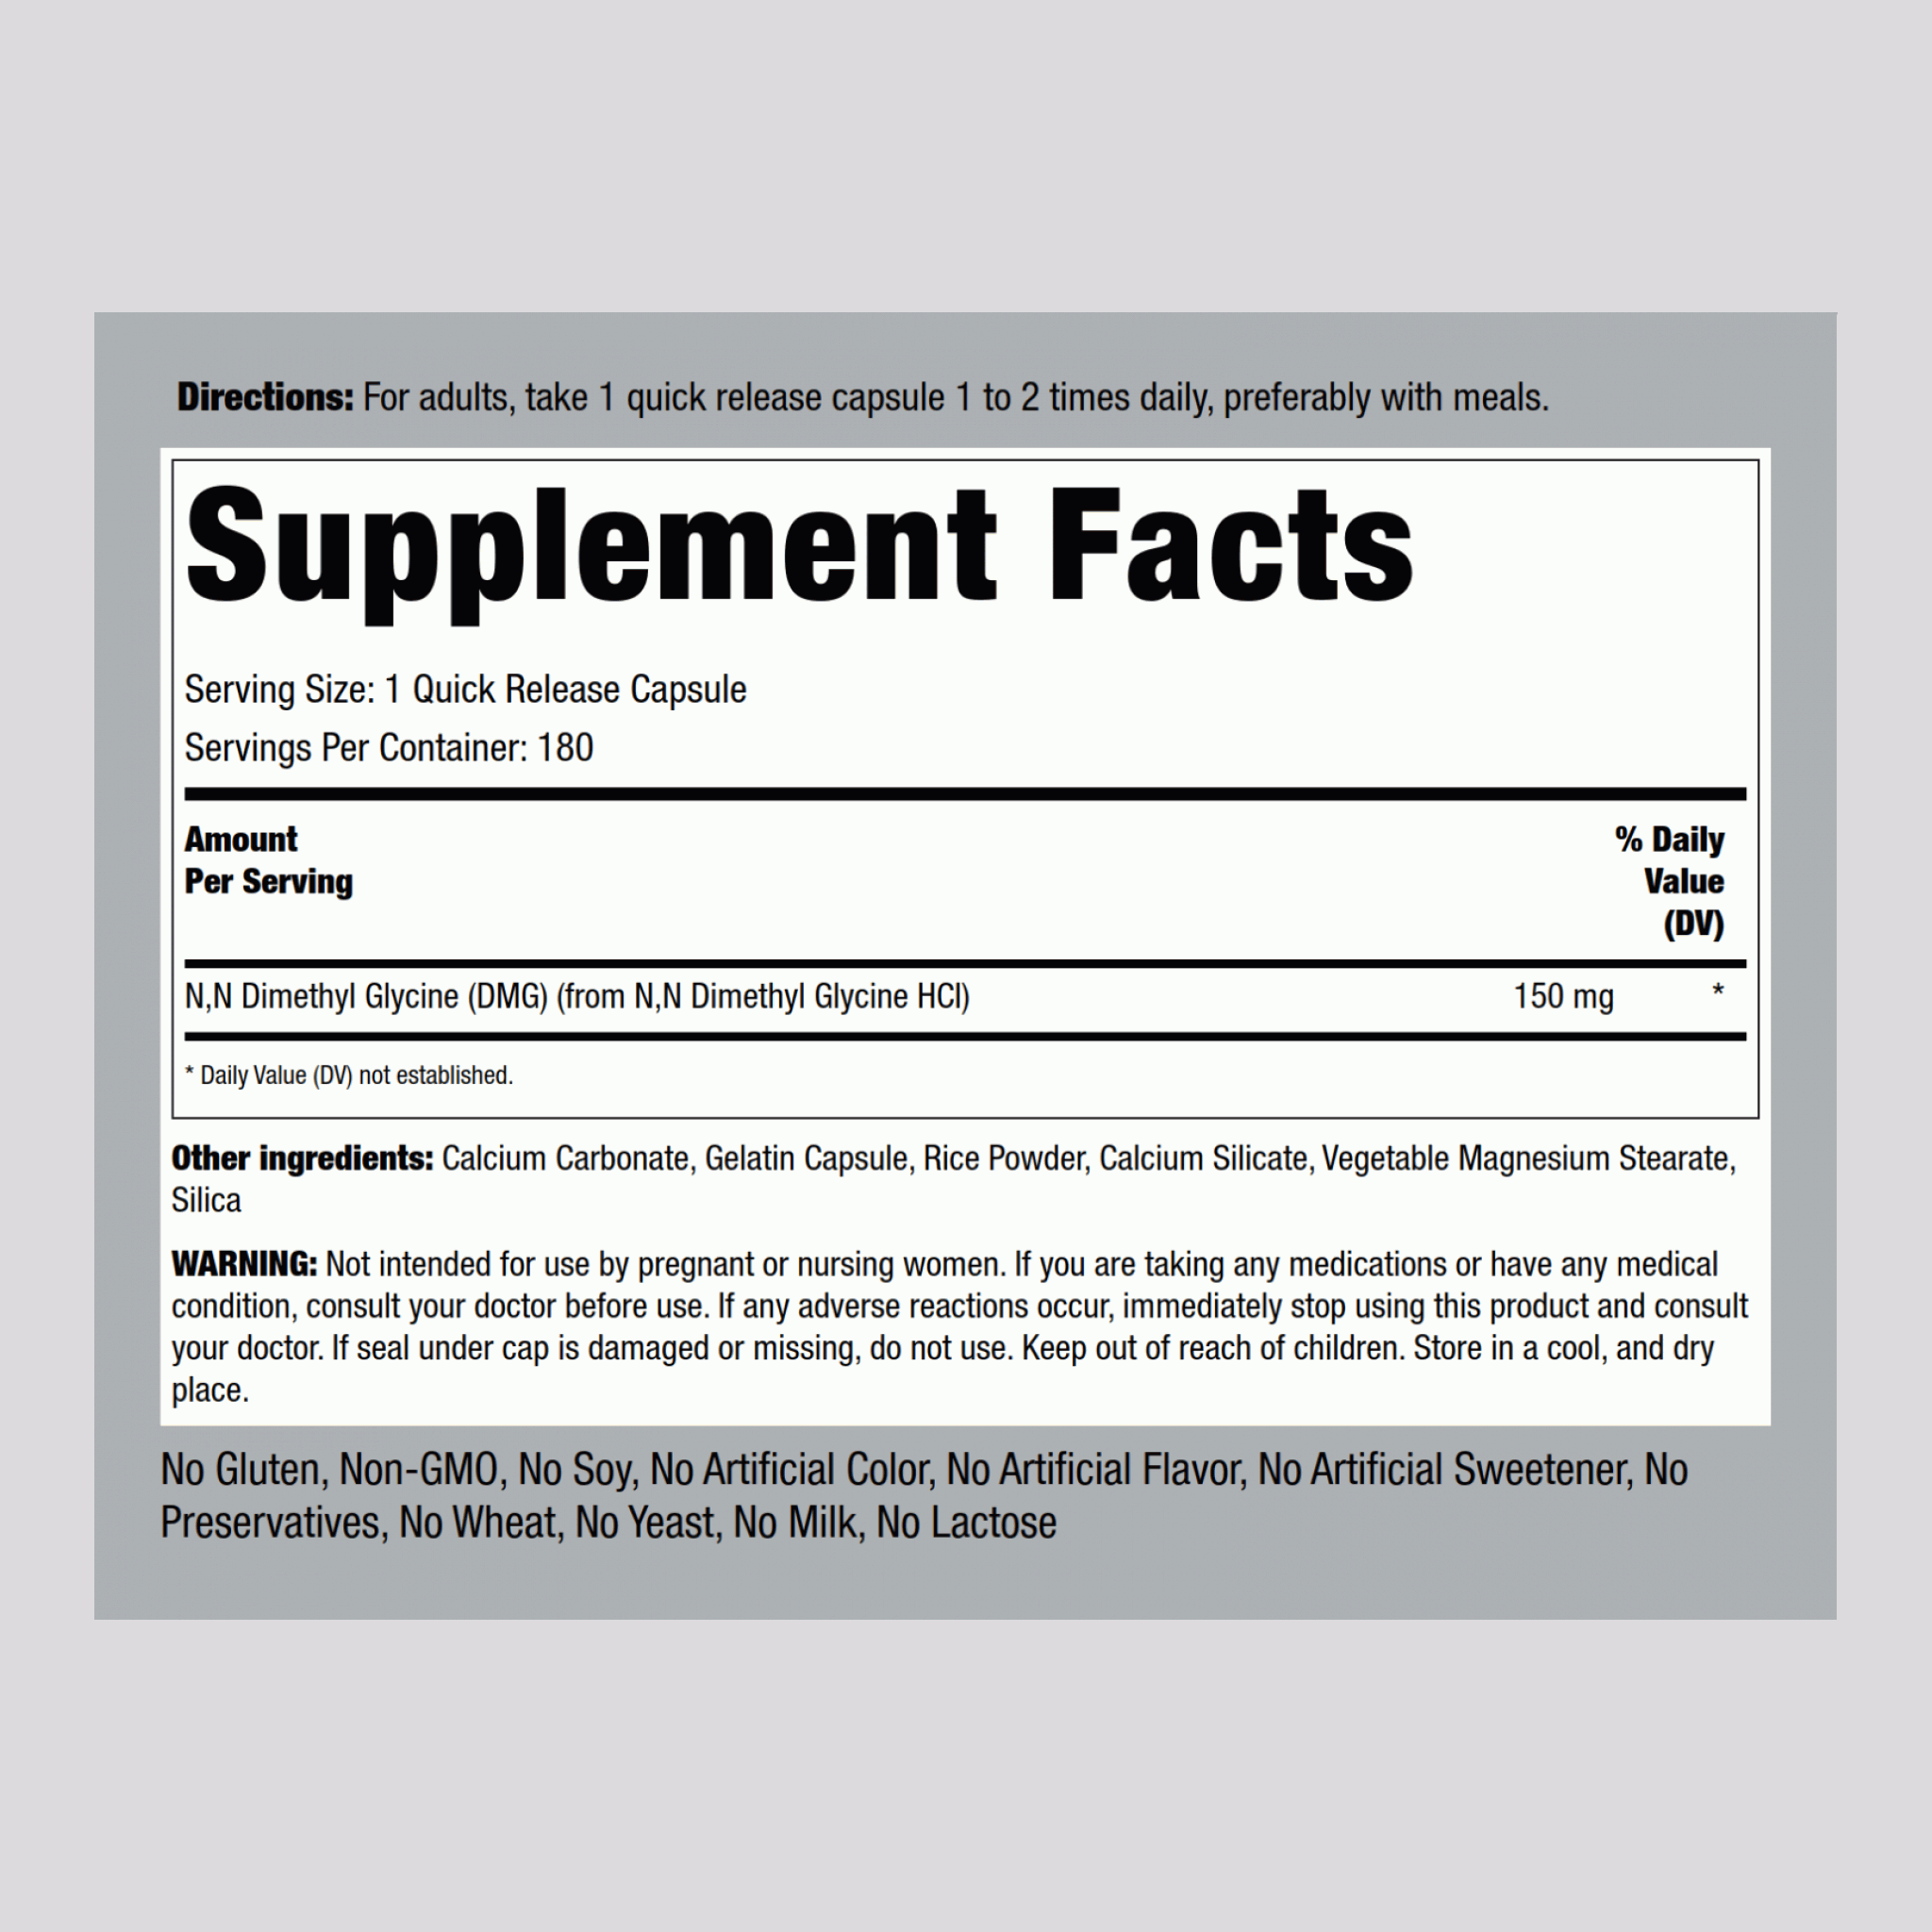 DMG (B-15), 150 mg, 180 Quick Release Capsules